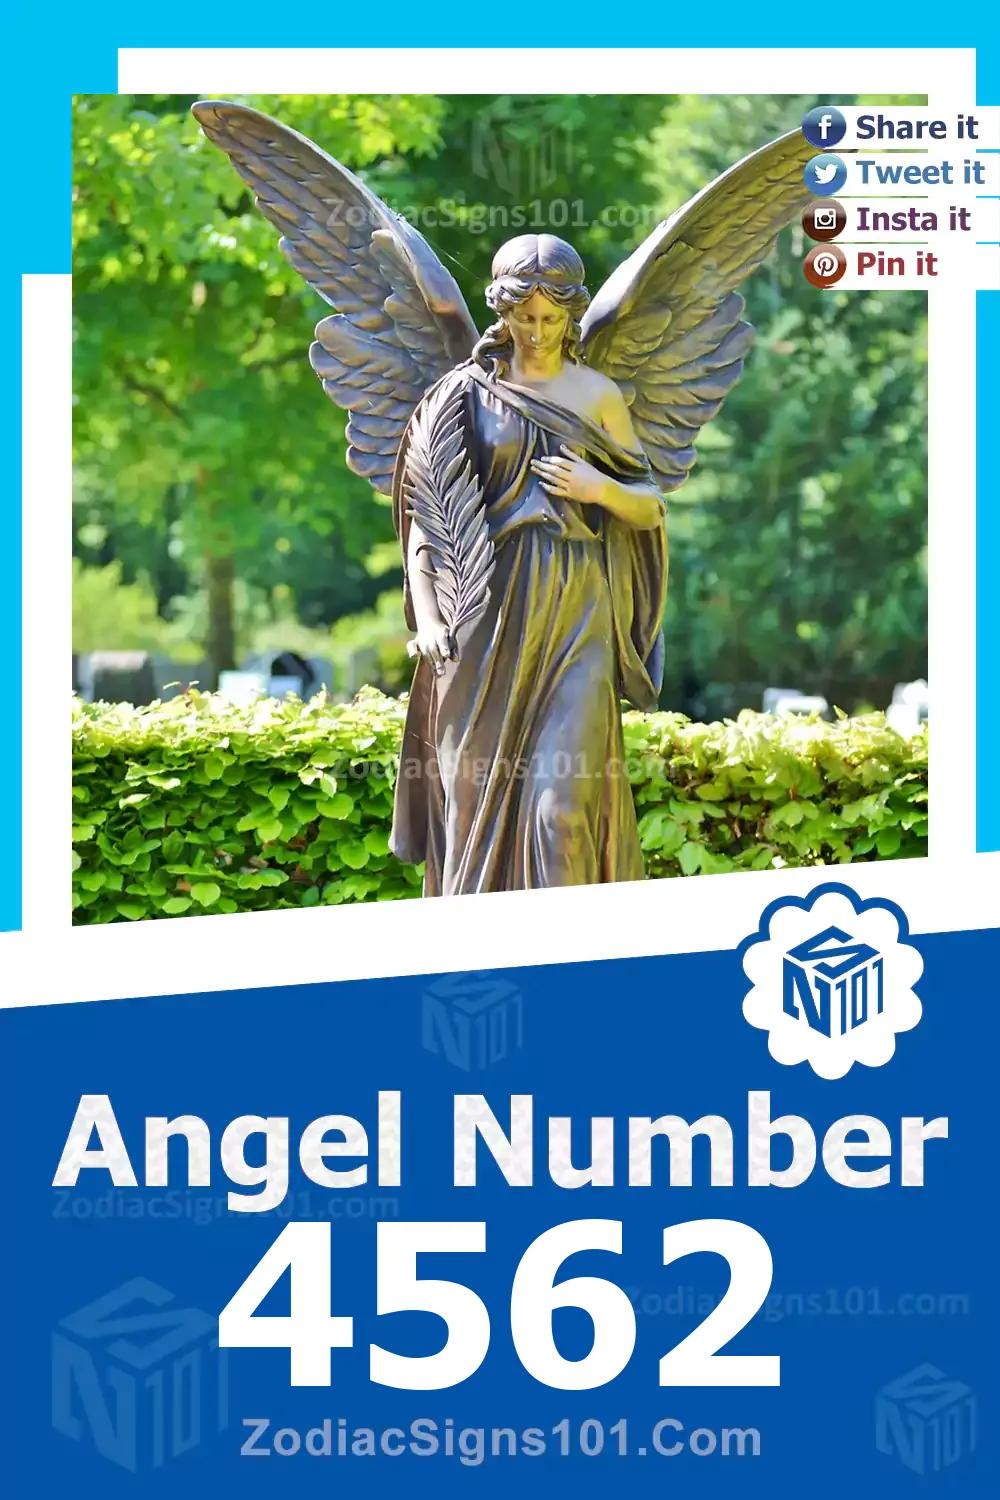 4562-Angel-Number-Meaning.jpg